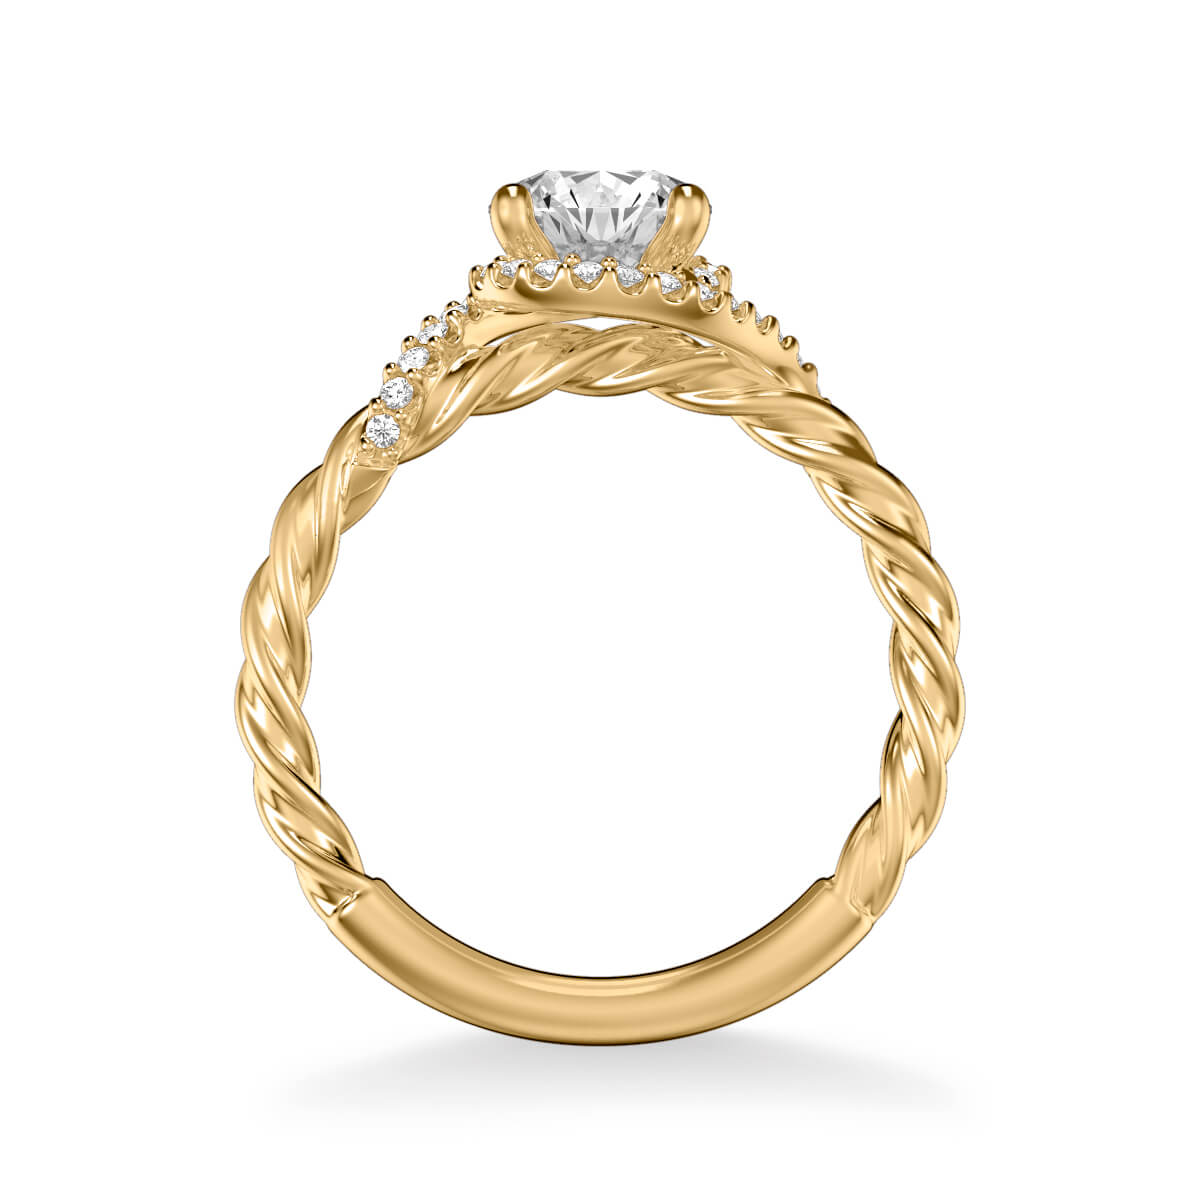 Twist Rope Style 1.75 Carat VS2 F Round Cut Diamond Engagement Ring